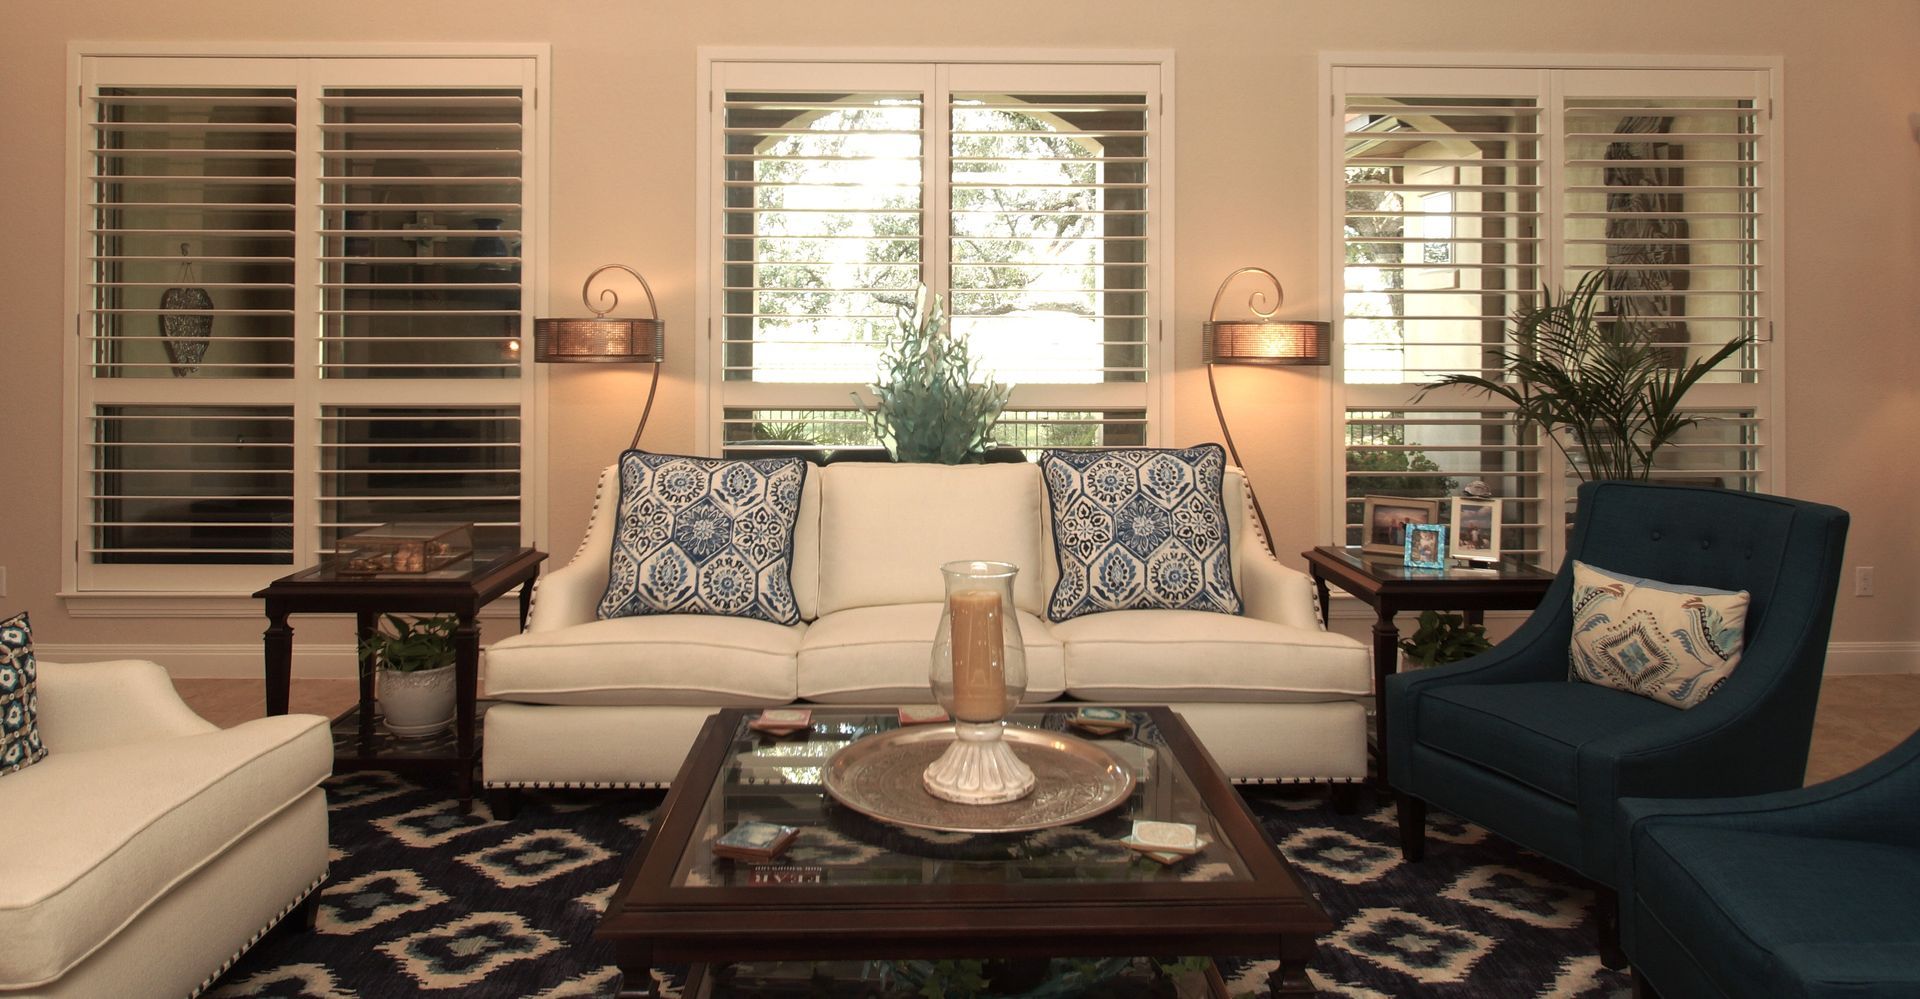 White plantation blinds in living room in Cedar Park, TX home